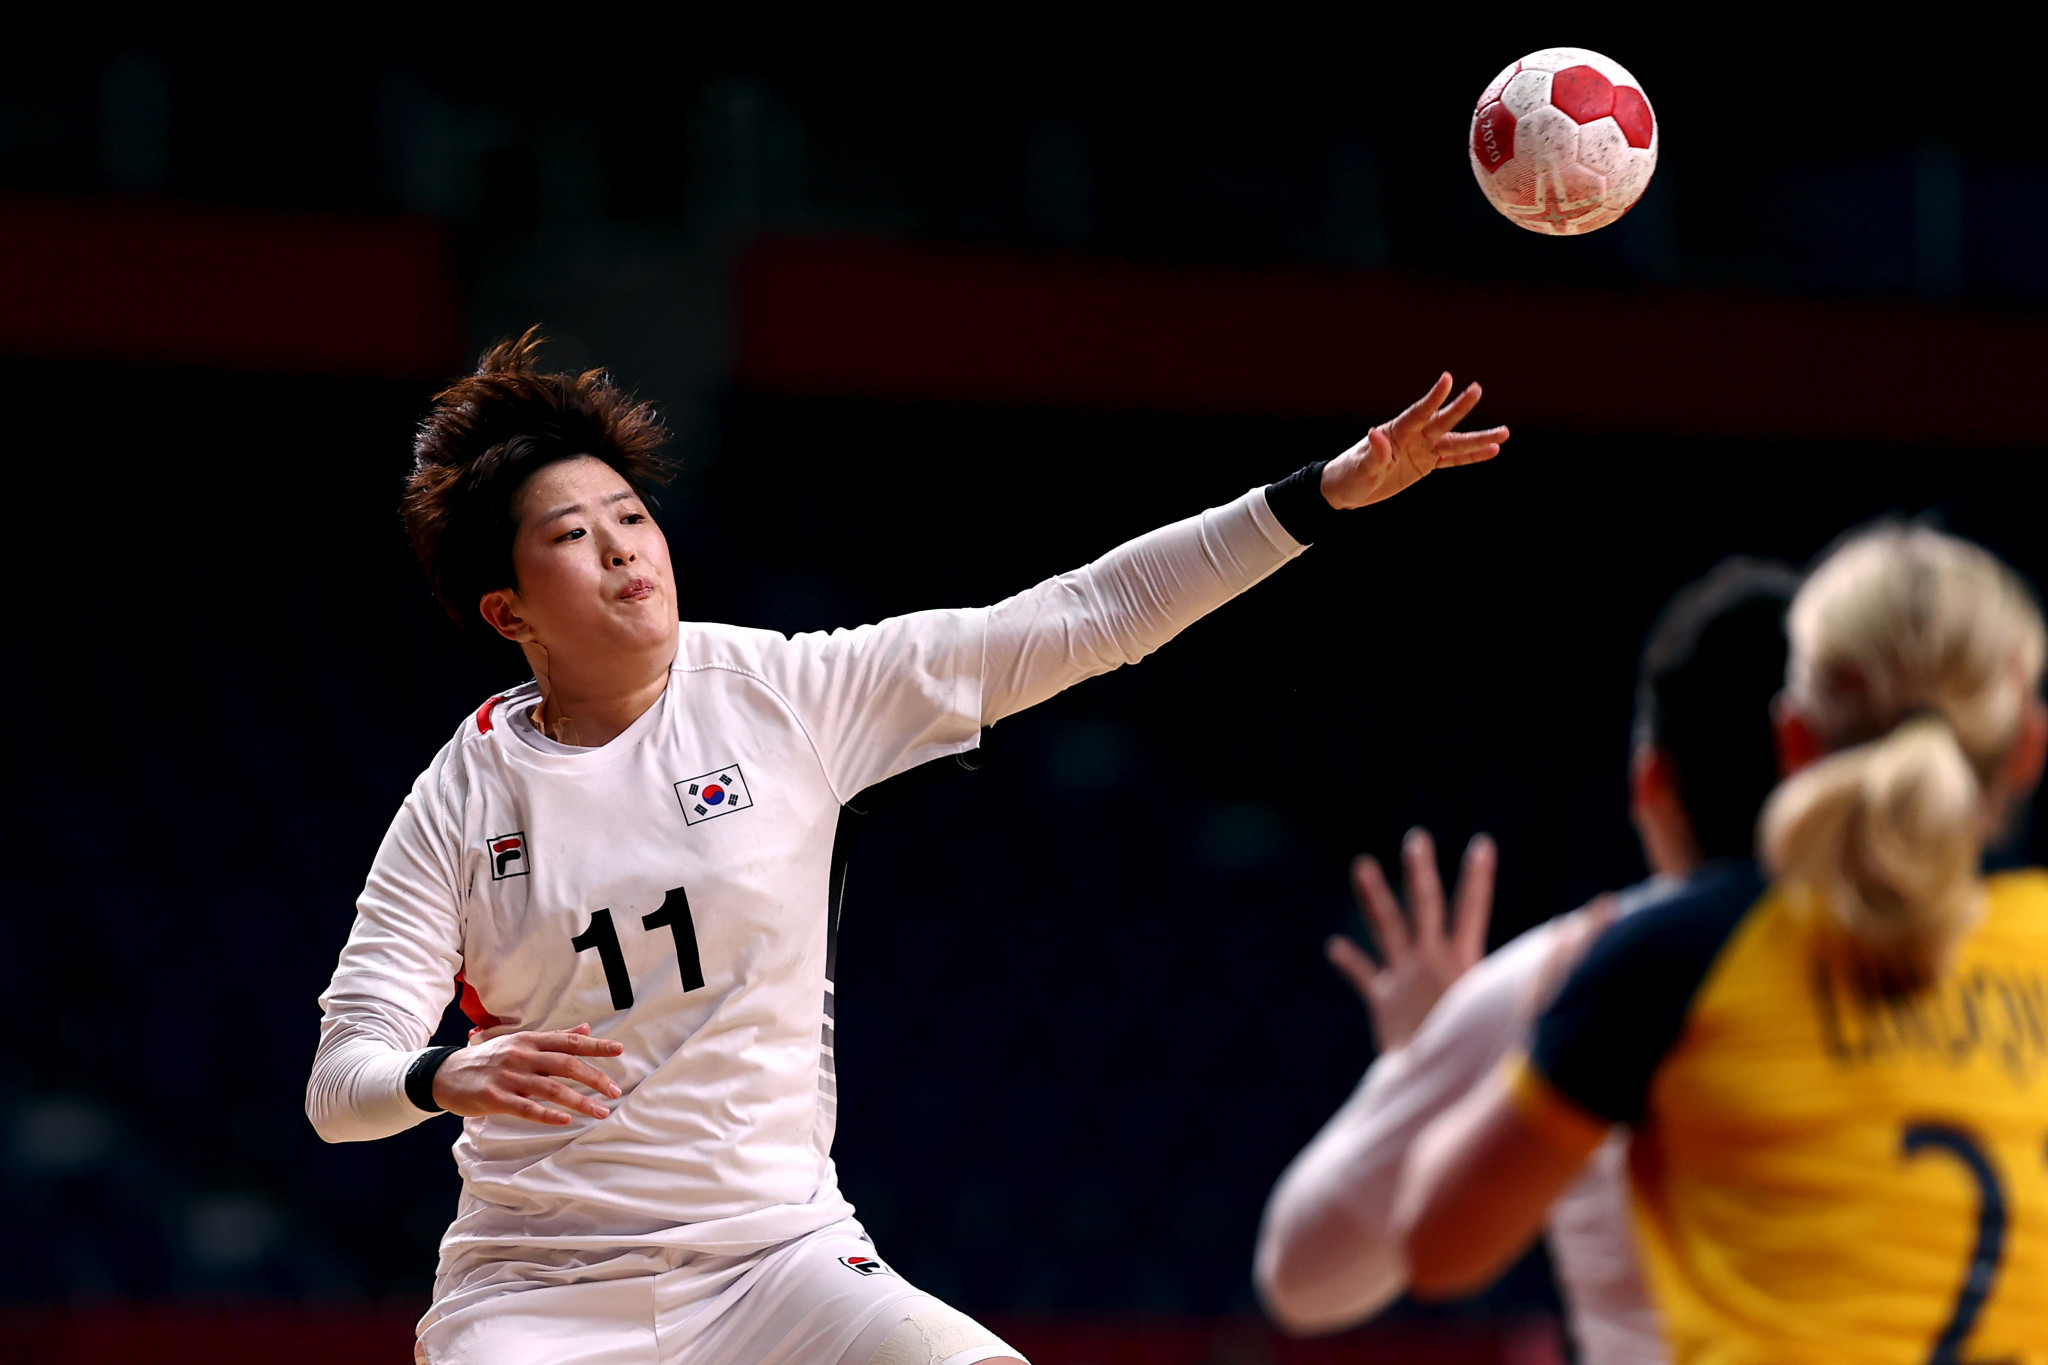 Eunhee Ryu scored 19 goals as South Korea beat Japan to win a sixth successive Asian Women's Handball Championship crown ©Getty Images